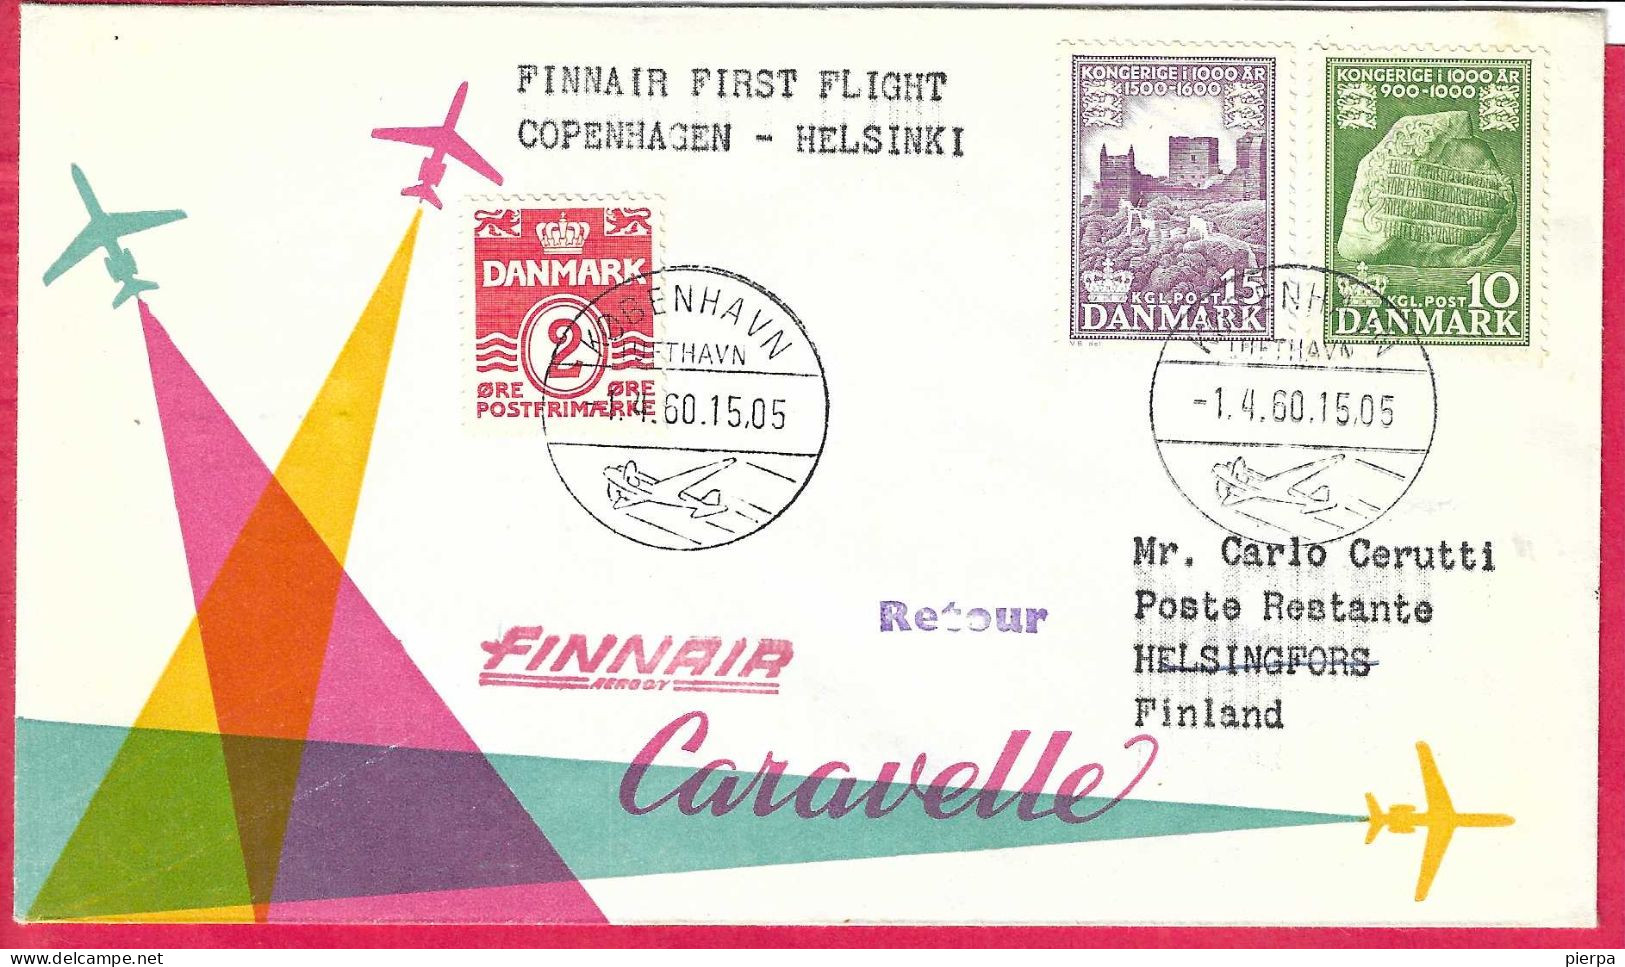 DANMARK - FIRST CARAVELLE FLIGHT - FINNAIR - FROM KOBENHAVN TO HELSINKY *1.4.60* ON OFFICIAL COVER - Luchtpostzegels